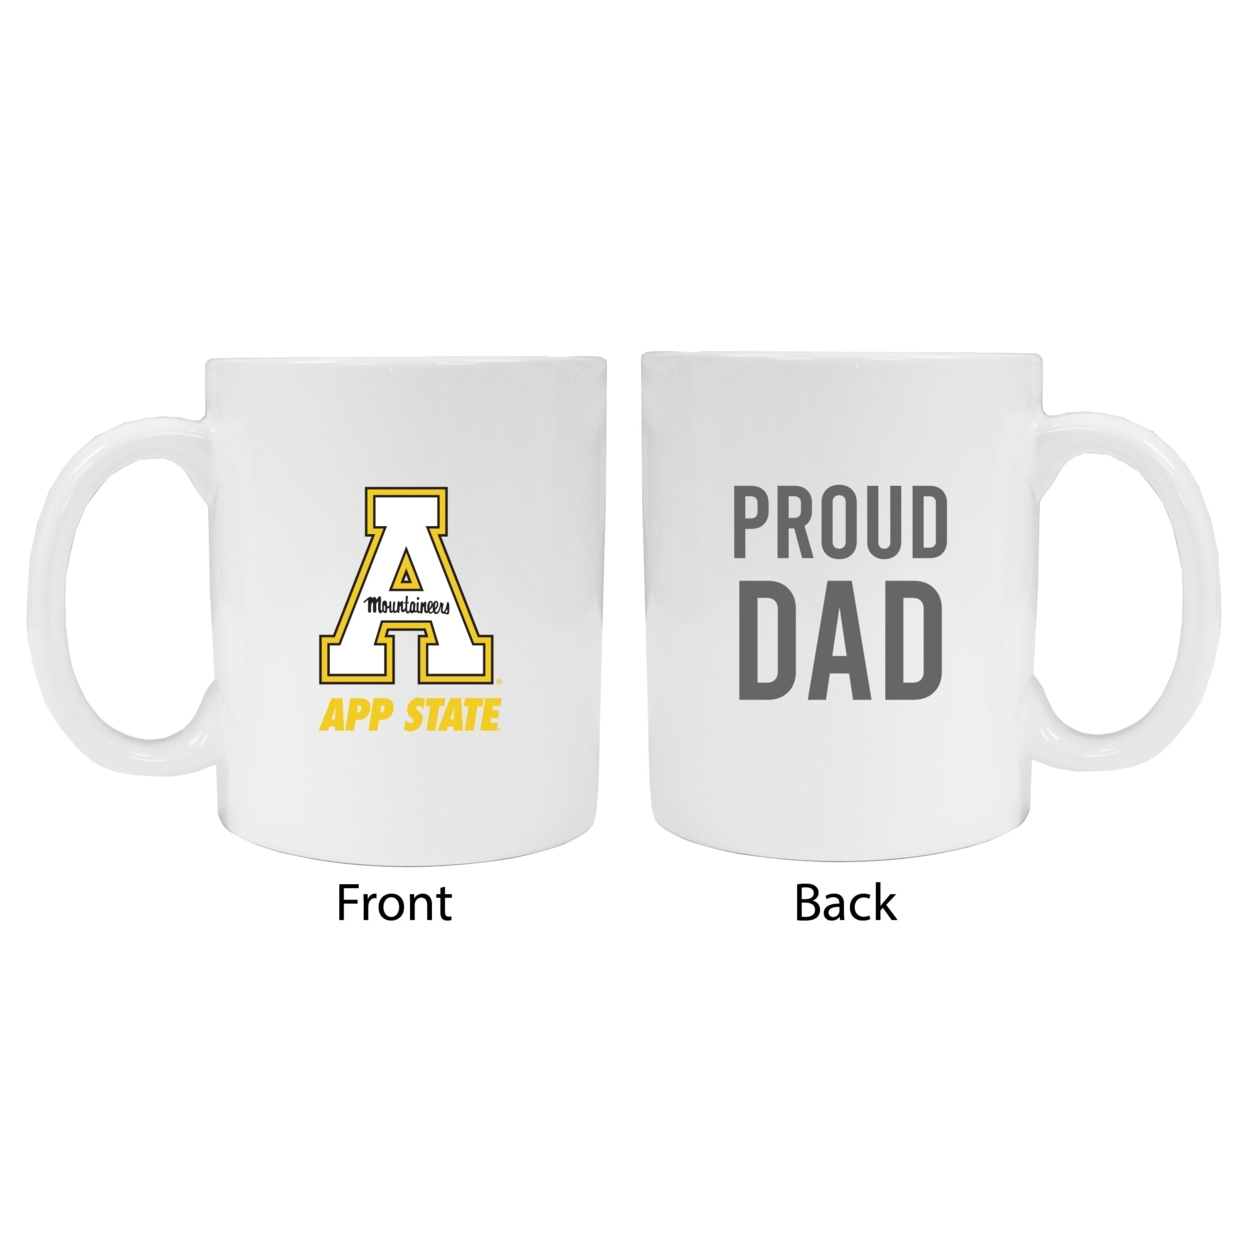 Appalachian State Proud Dad Ceramic Coffee Mug - White (2 Pack)